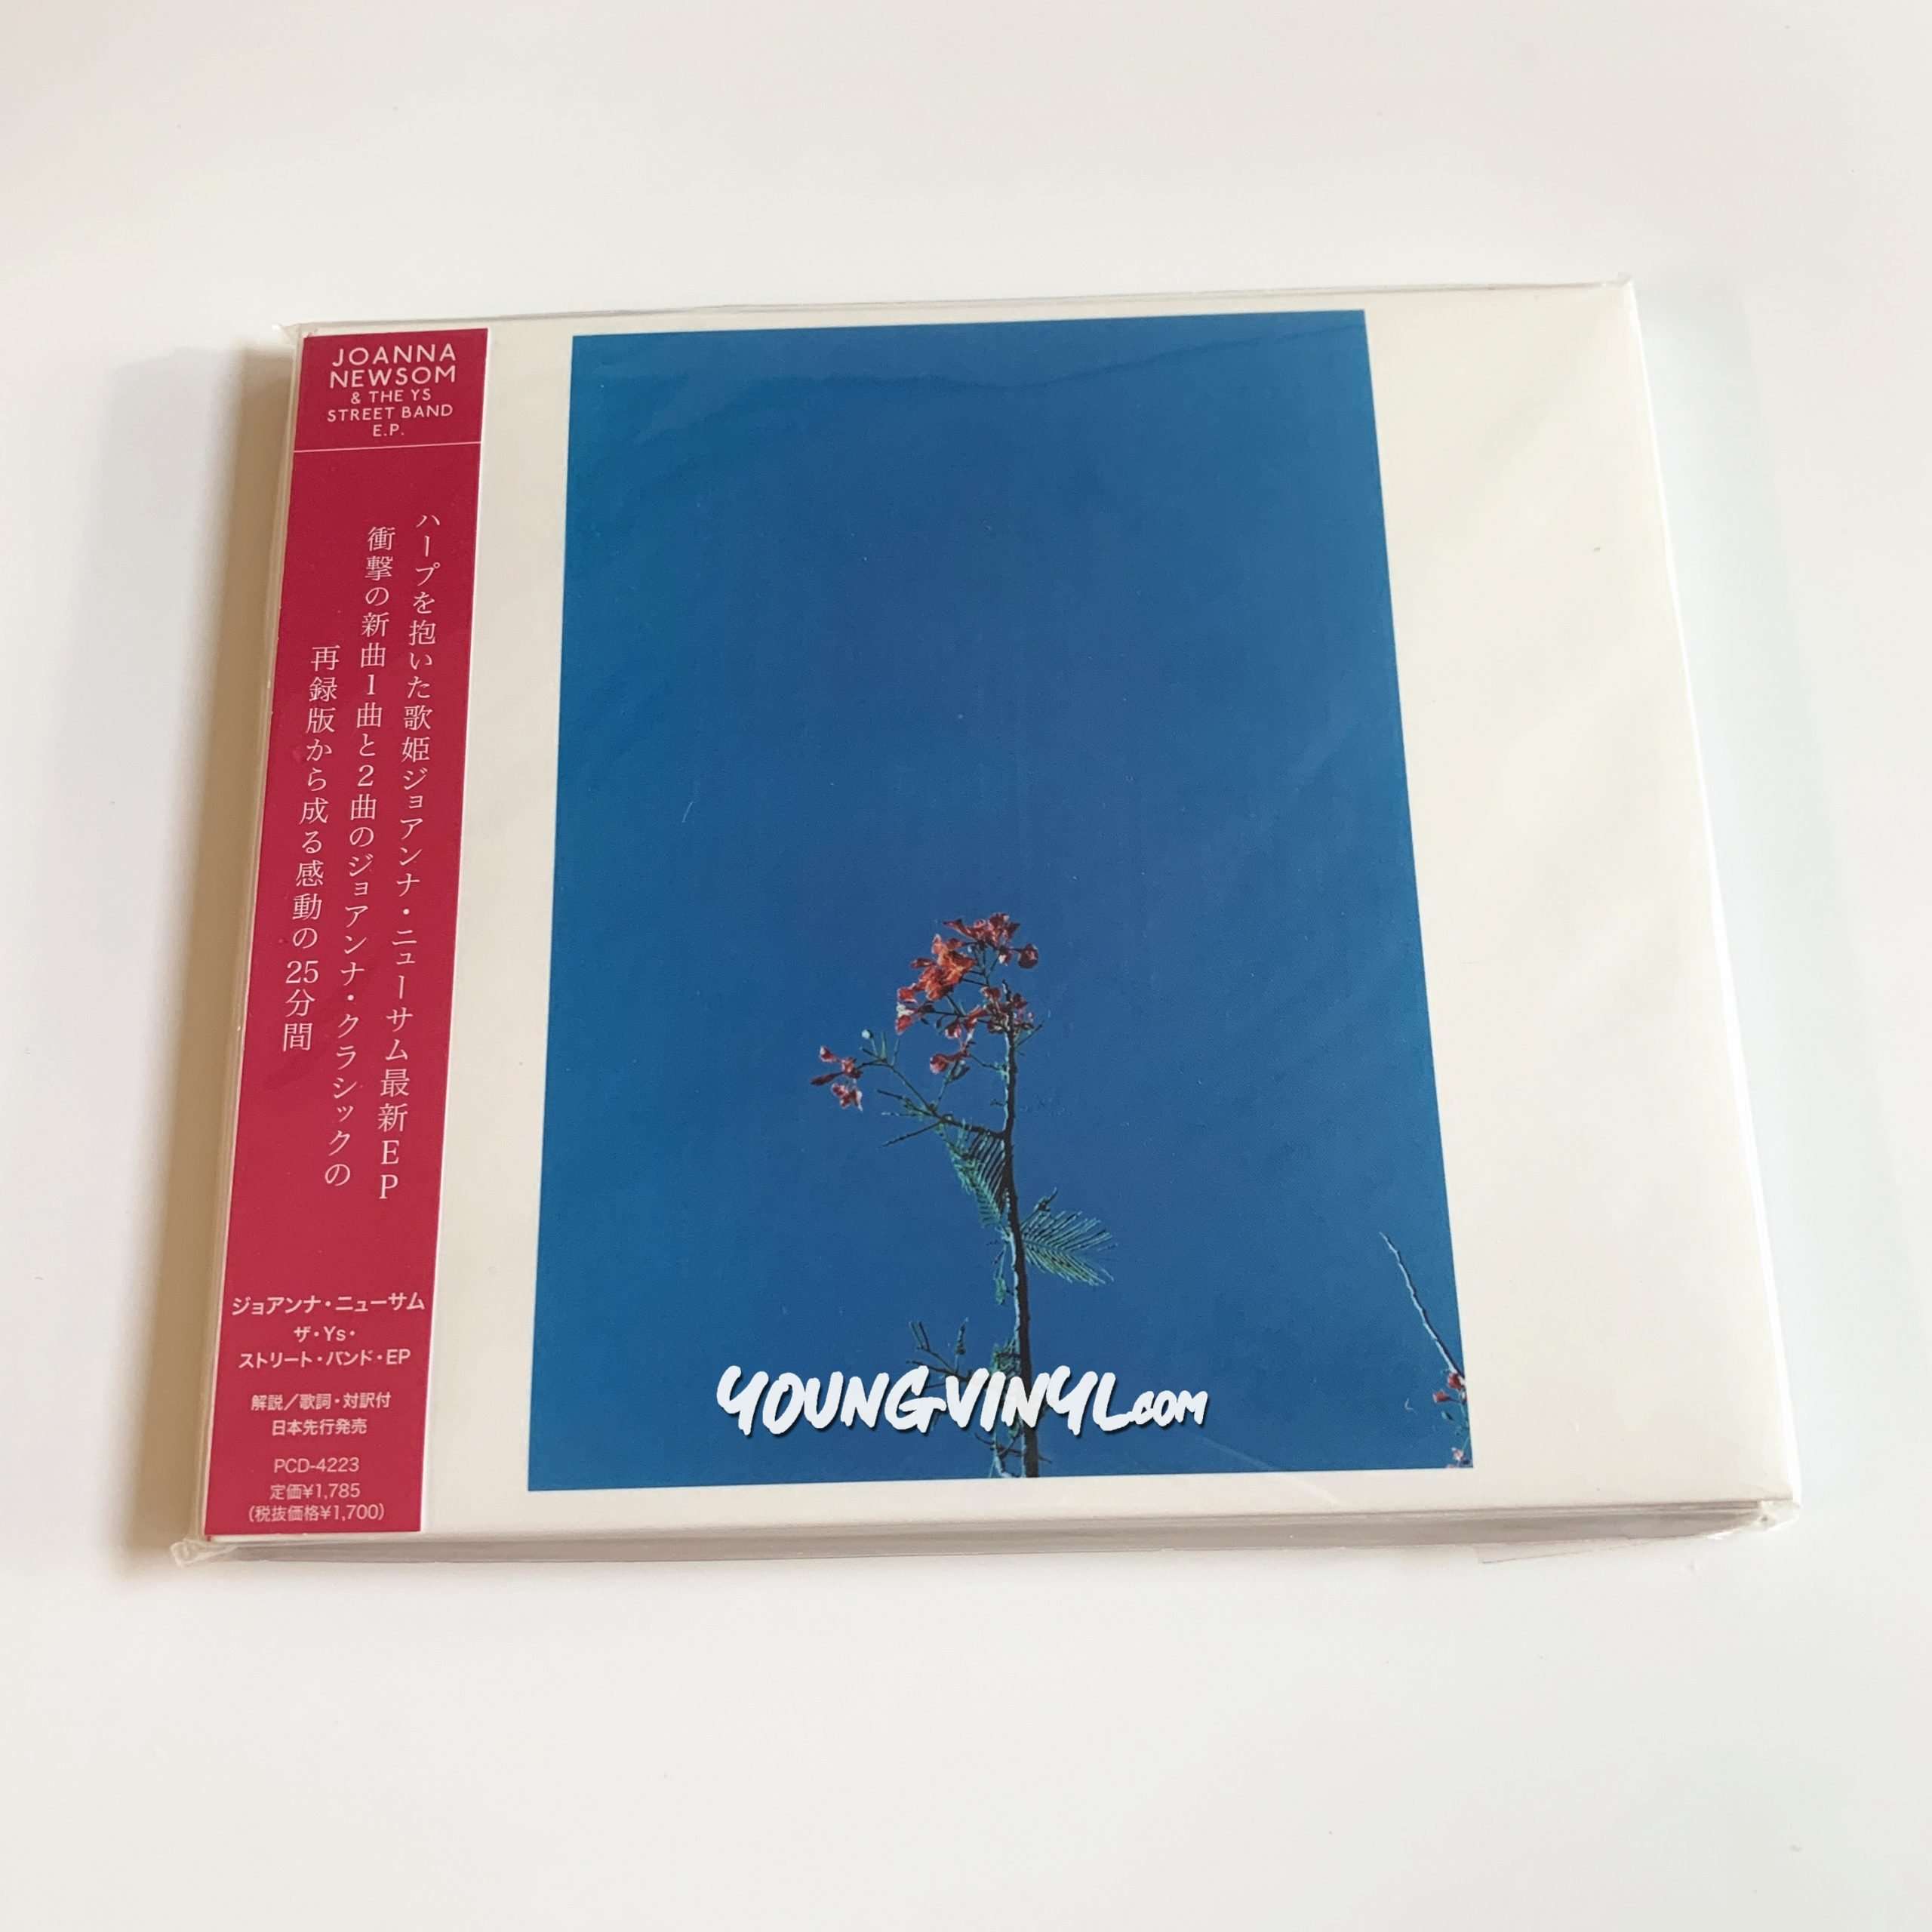 Joanna Newsom The Ys Street Band E P Cd Japanese Pressing Young Vinyl